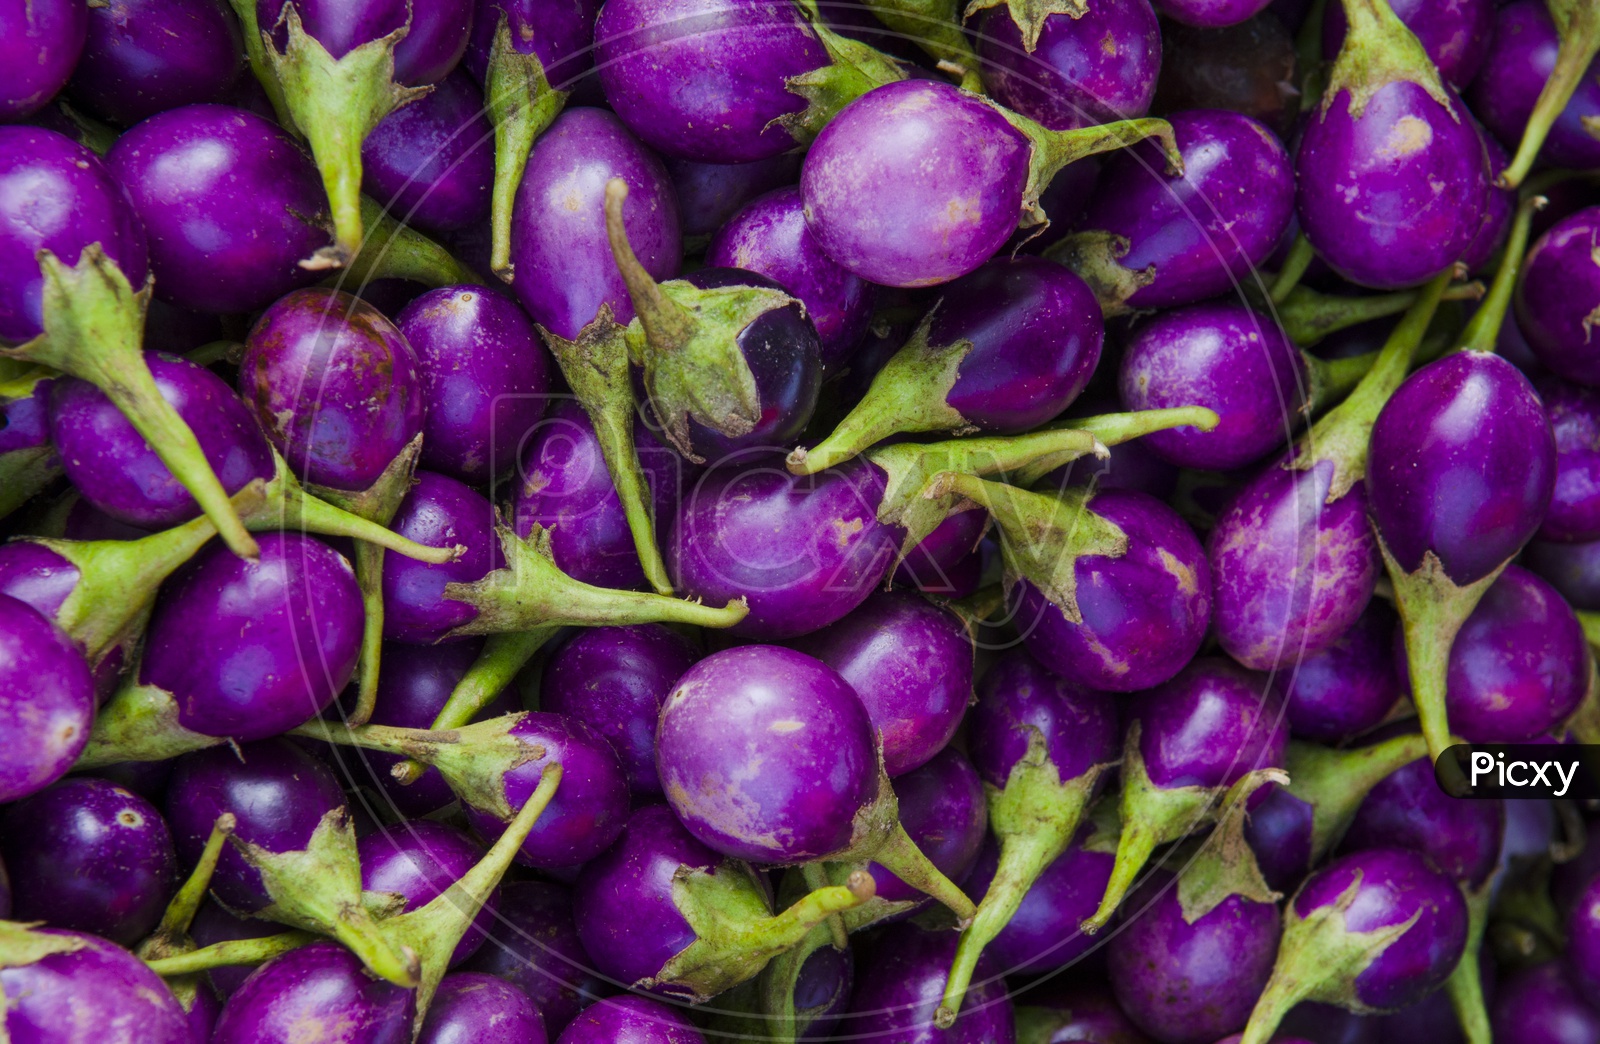 Eggplant Vegetables Closeup forming a Background